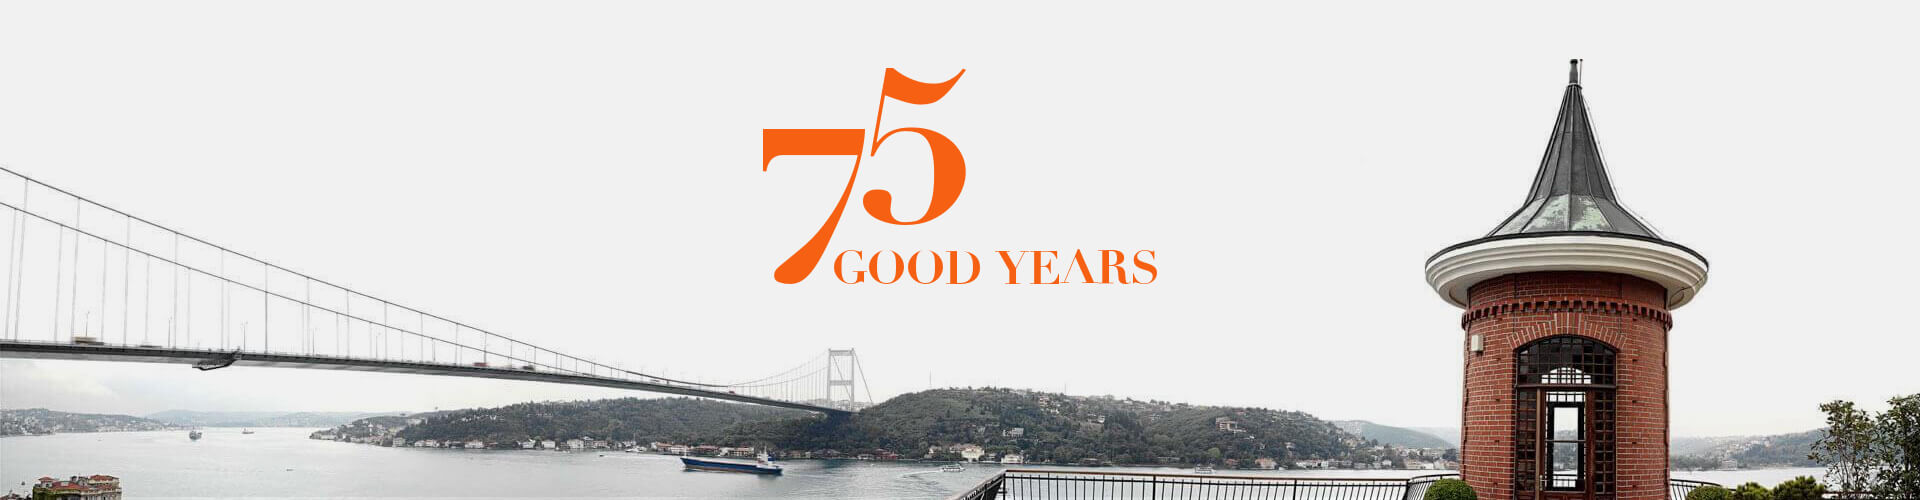 75 Good Years